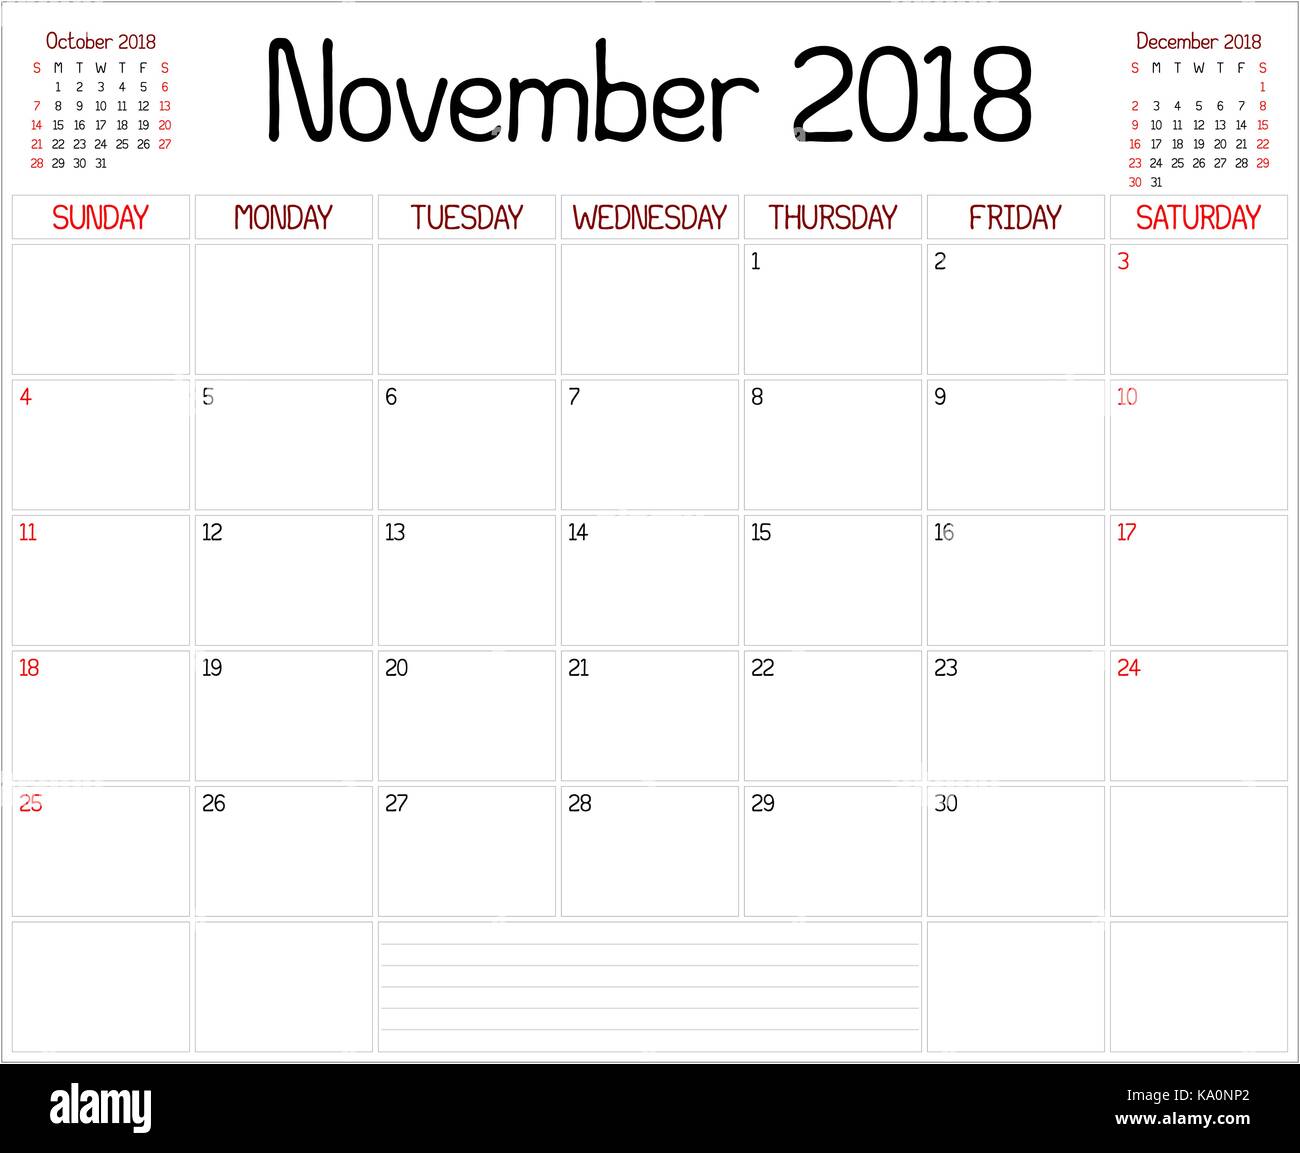 Year 2018 November Planner - A monthly planner calendar for November 2018 on white. A custom handwritten style is used. Stock Vector